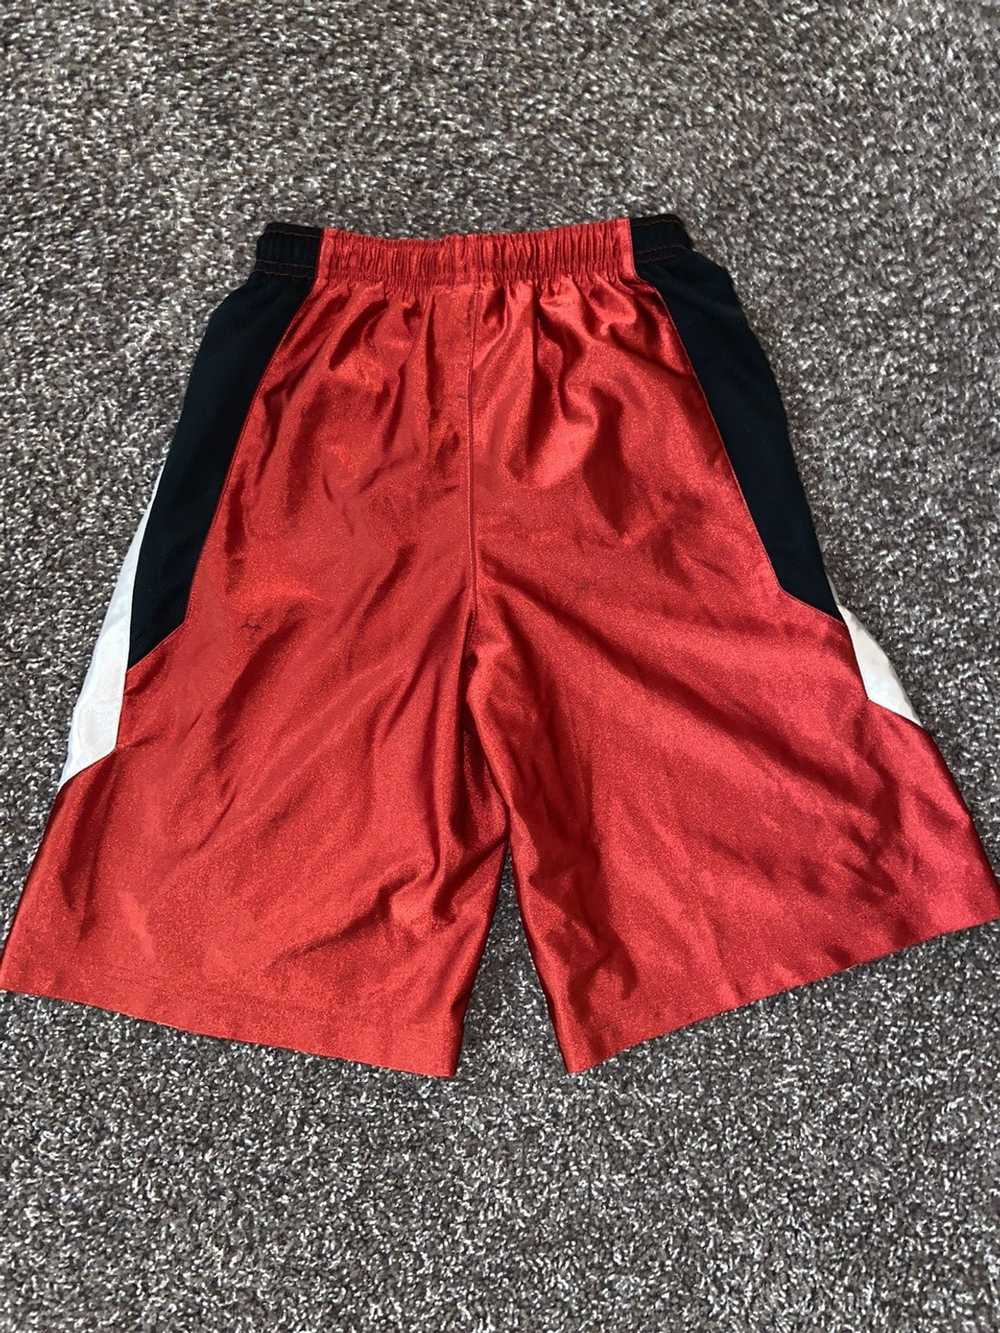 Nike Nike Vintage 90s Red Shorts - image 2